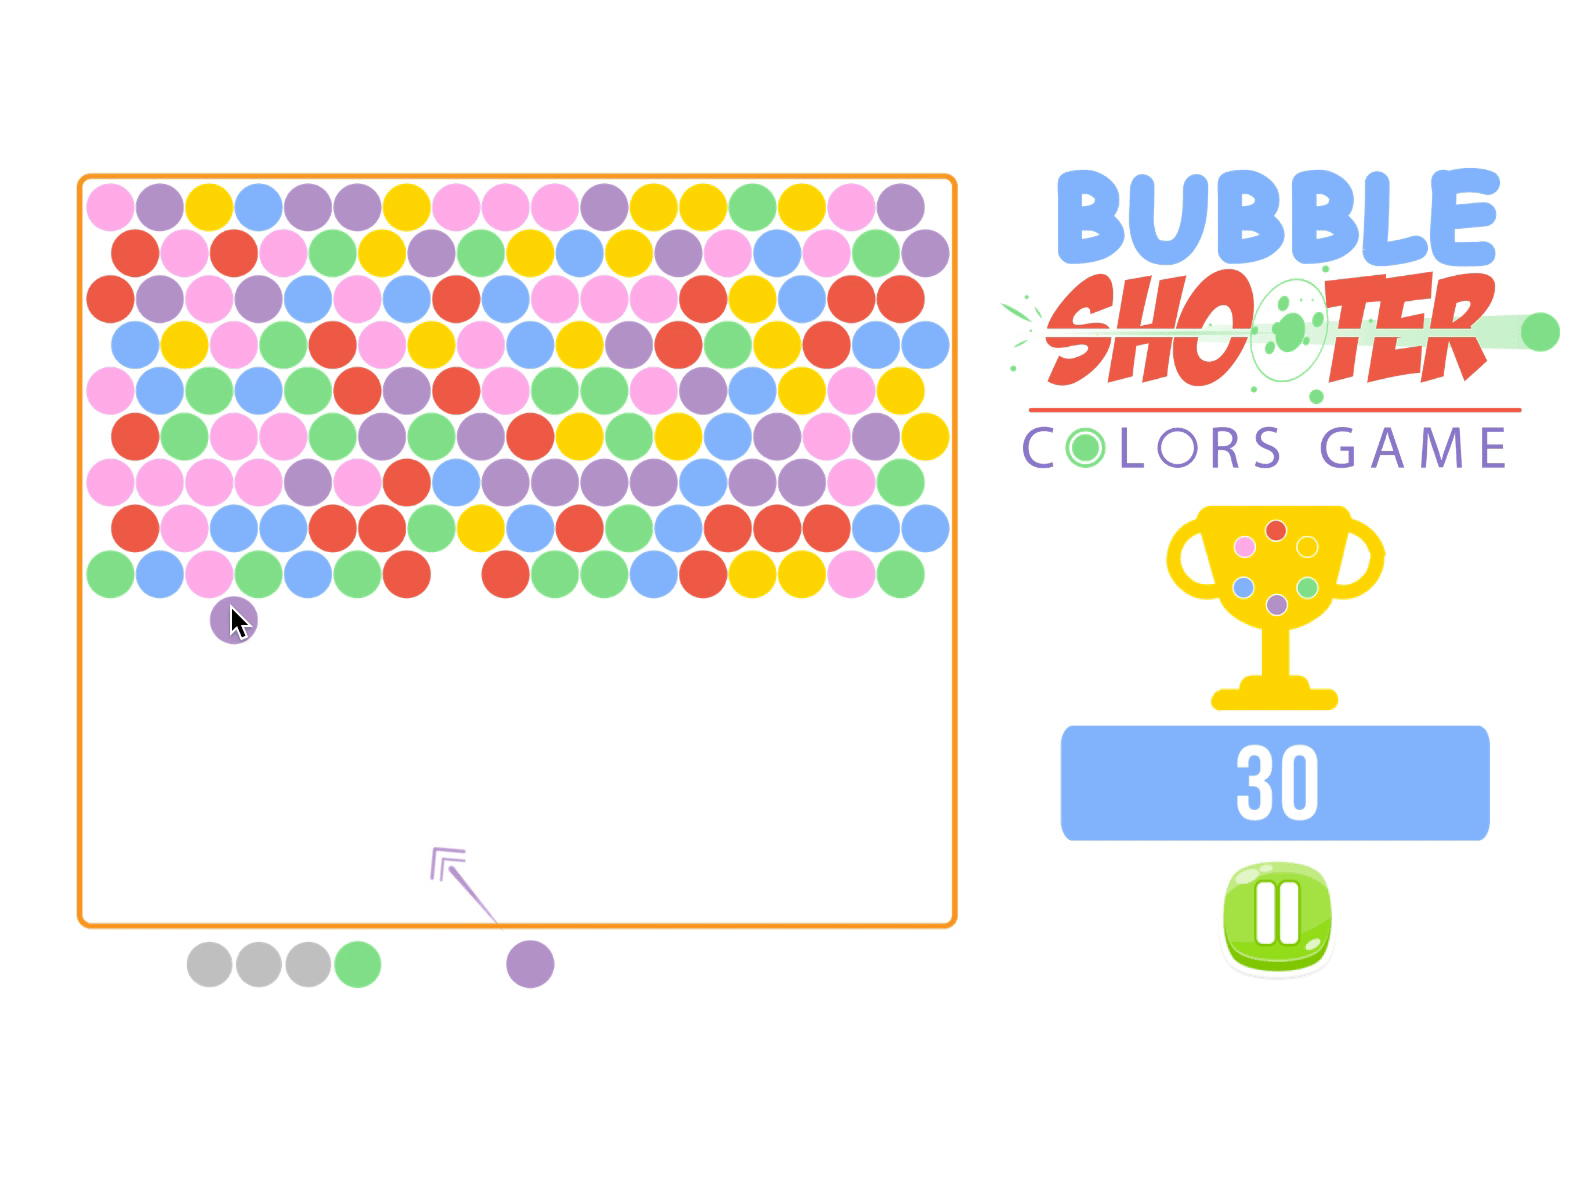 Bubble Shooter Colors Game Screenshot 9